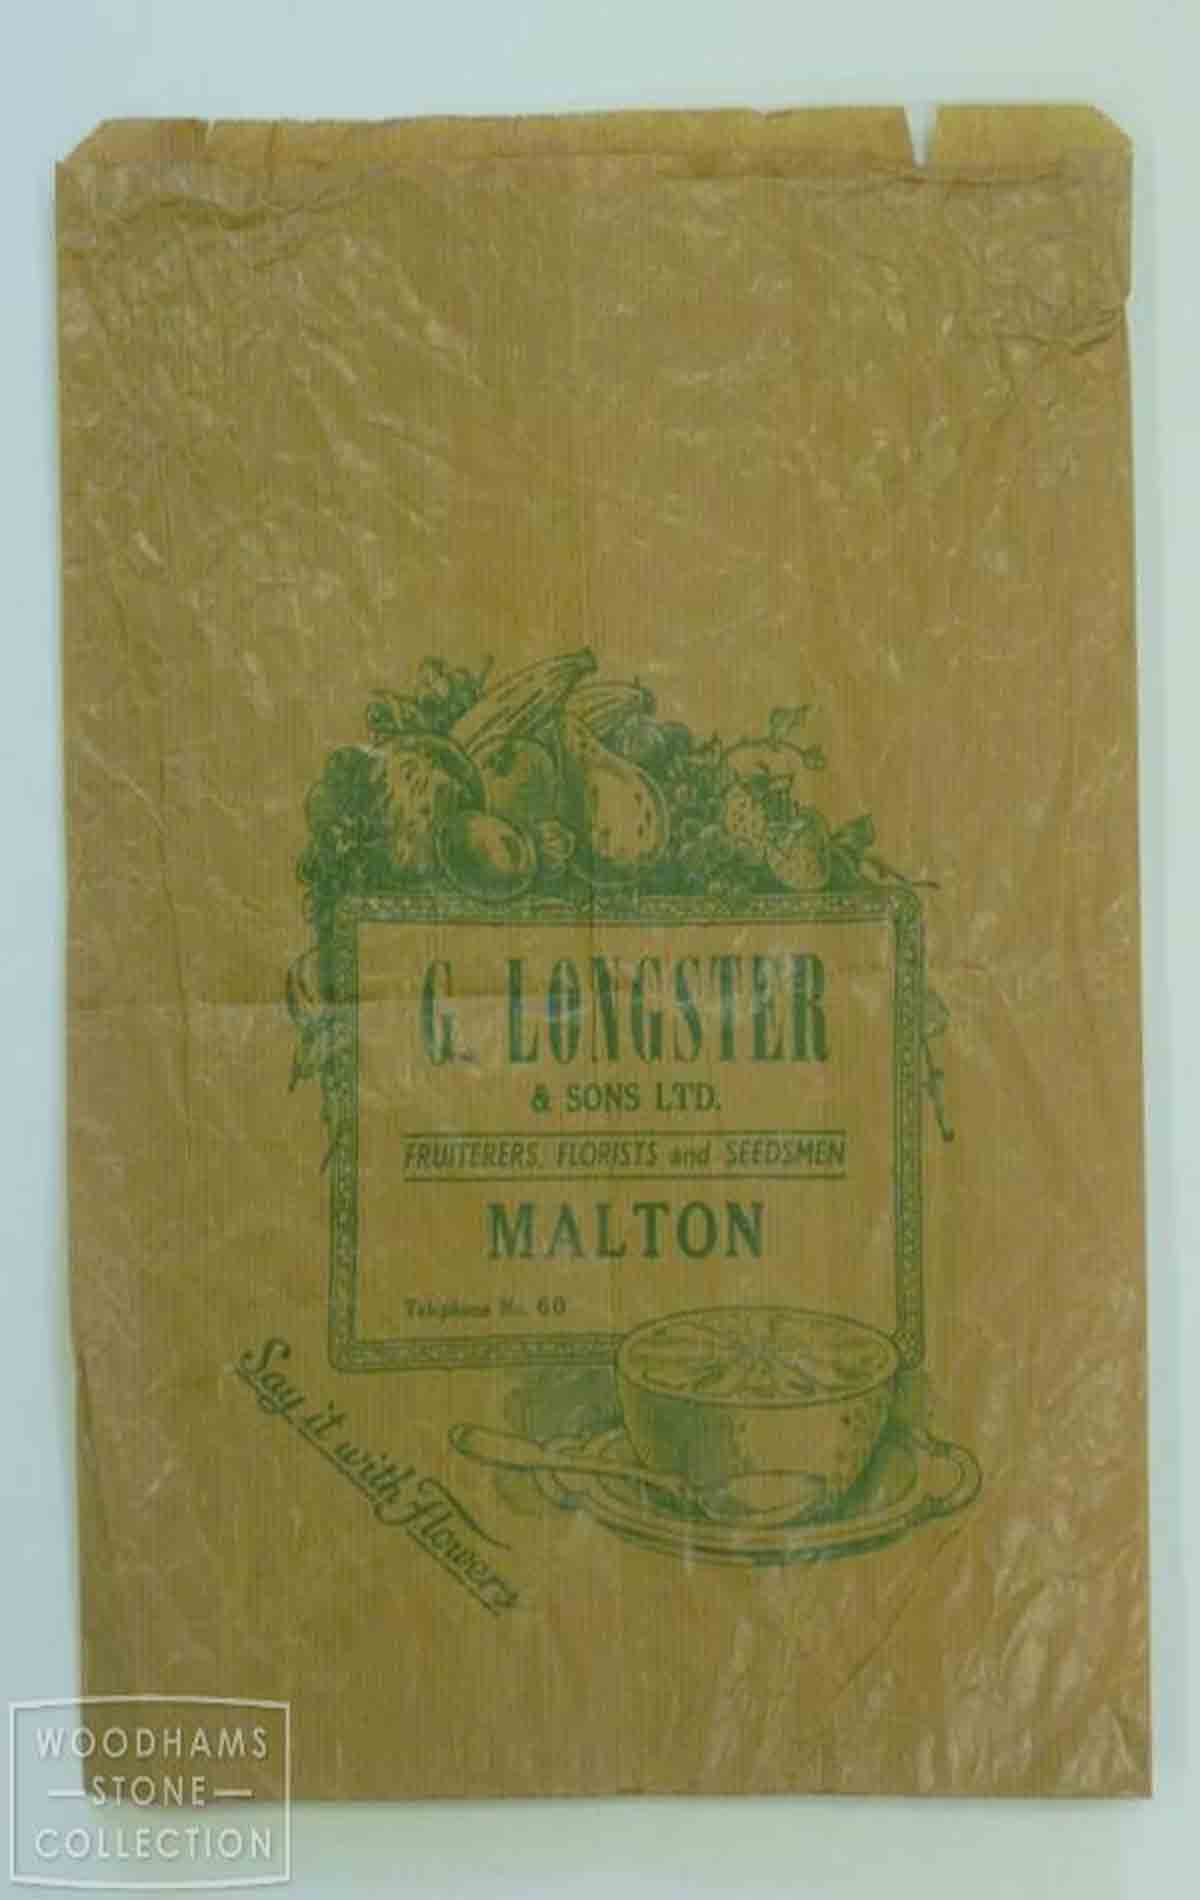 G. Longster, florist, paper bag